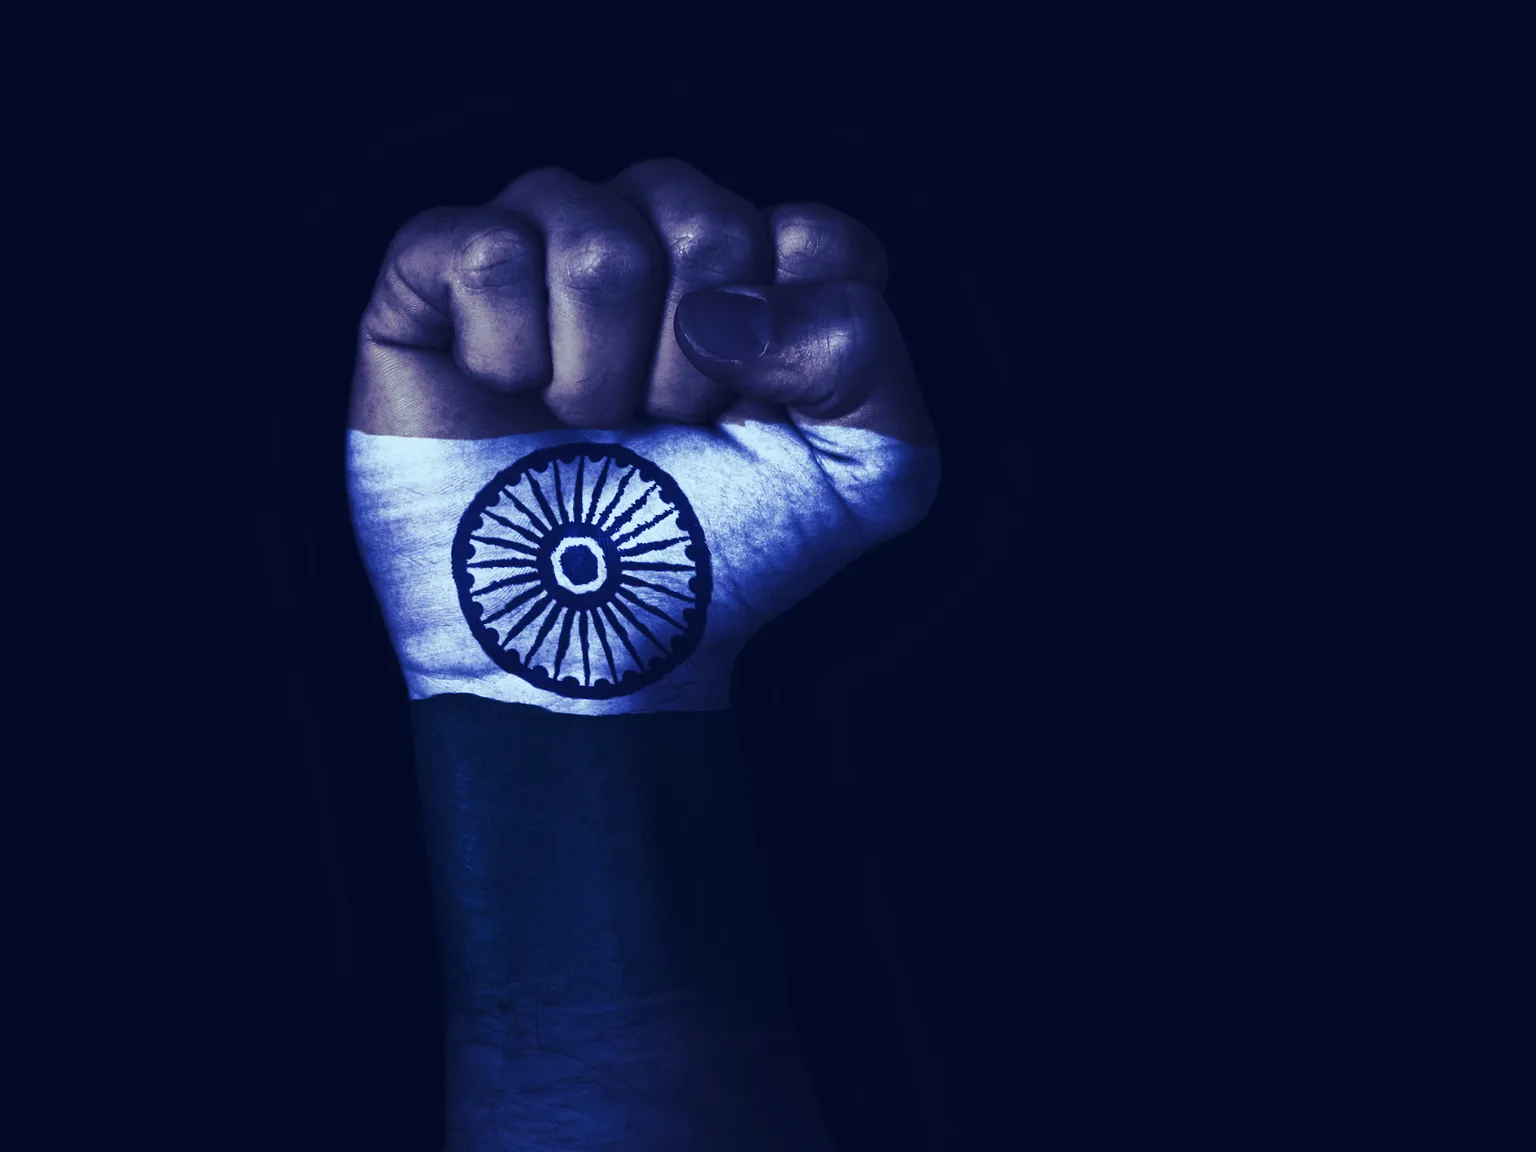 Flag of India painted on raised fist. Image: Shutterstock